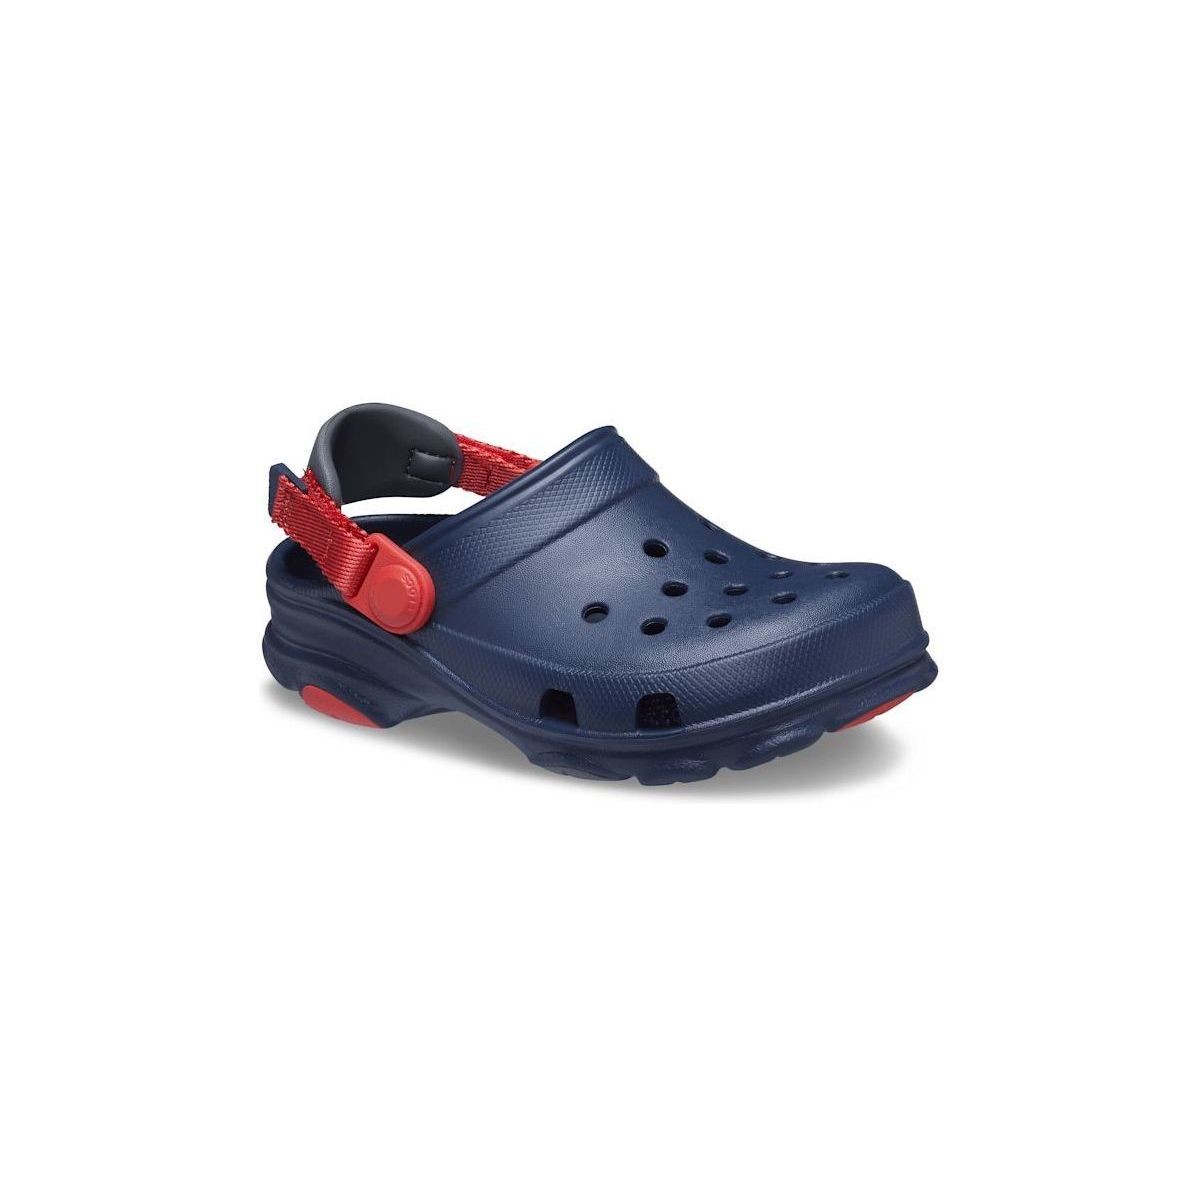 Čevlji  Otroci Natikači Crocs Crocs™ Classic All-Terrain Clog Kid's 206747 Navy